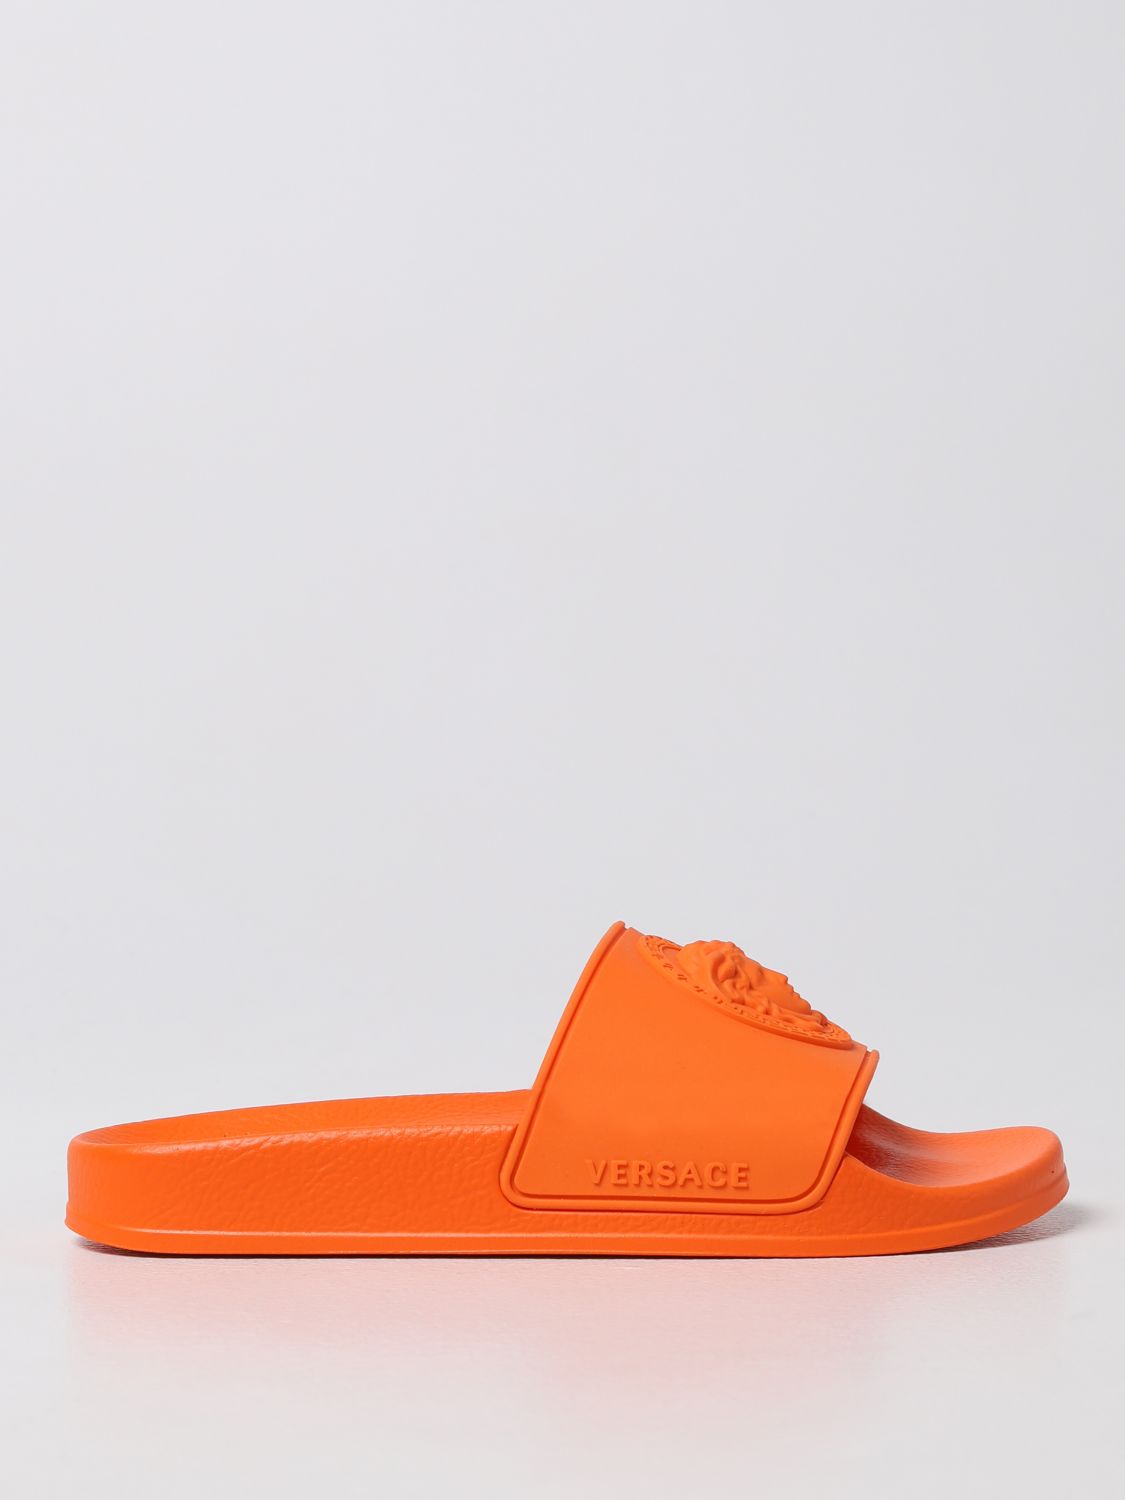 Schuhe Young Versace: Young Versace Jungen Schuhe orange 1